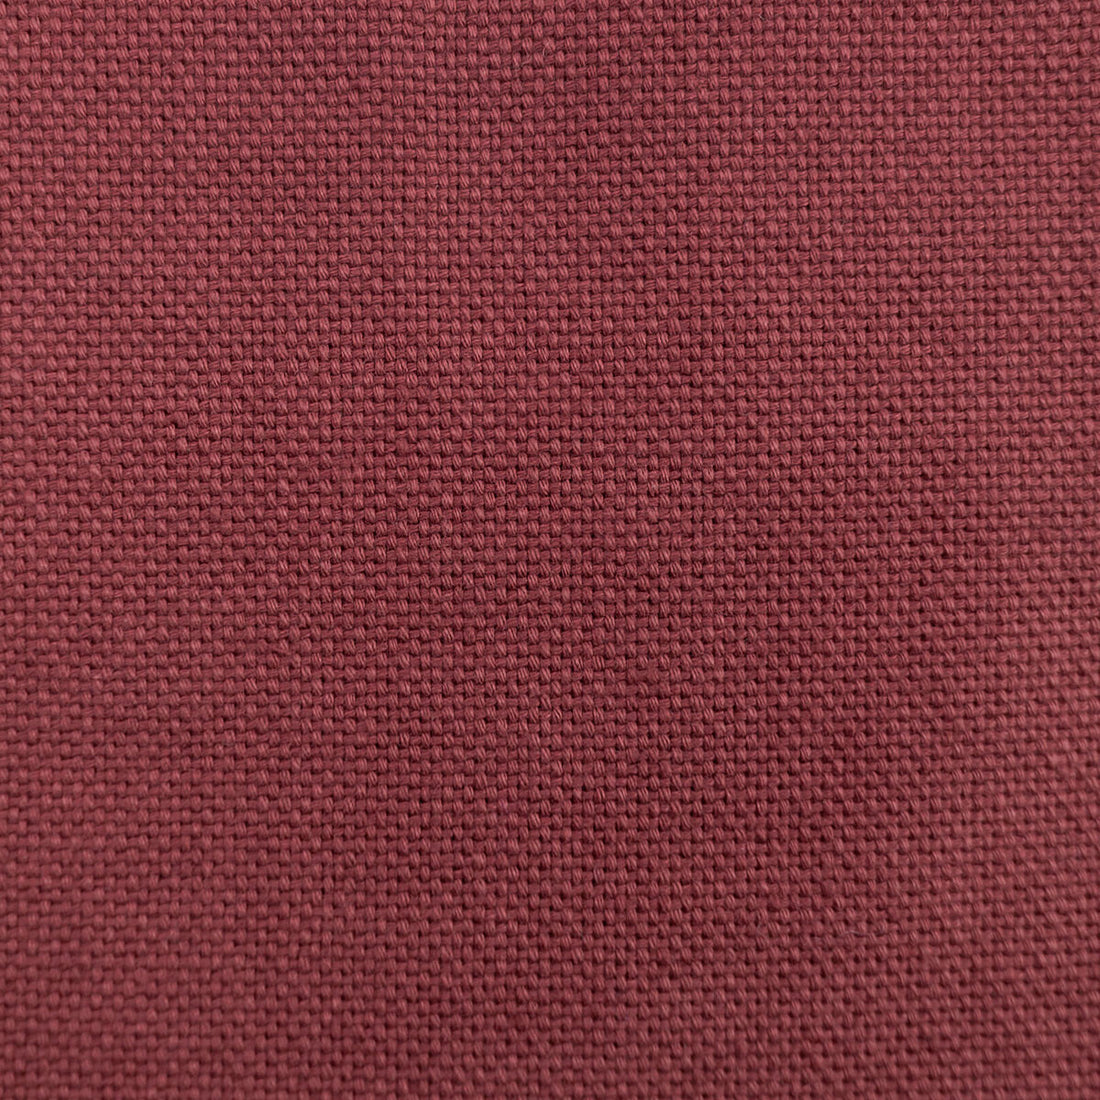 Dobra fabric in rojo color - pattern LCT1075.011.0 - by Gaston y Daniela in the Lorenzo Castillo VII The Rectory collection